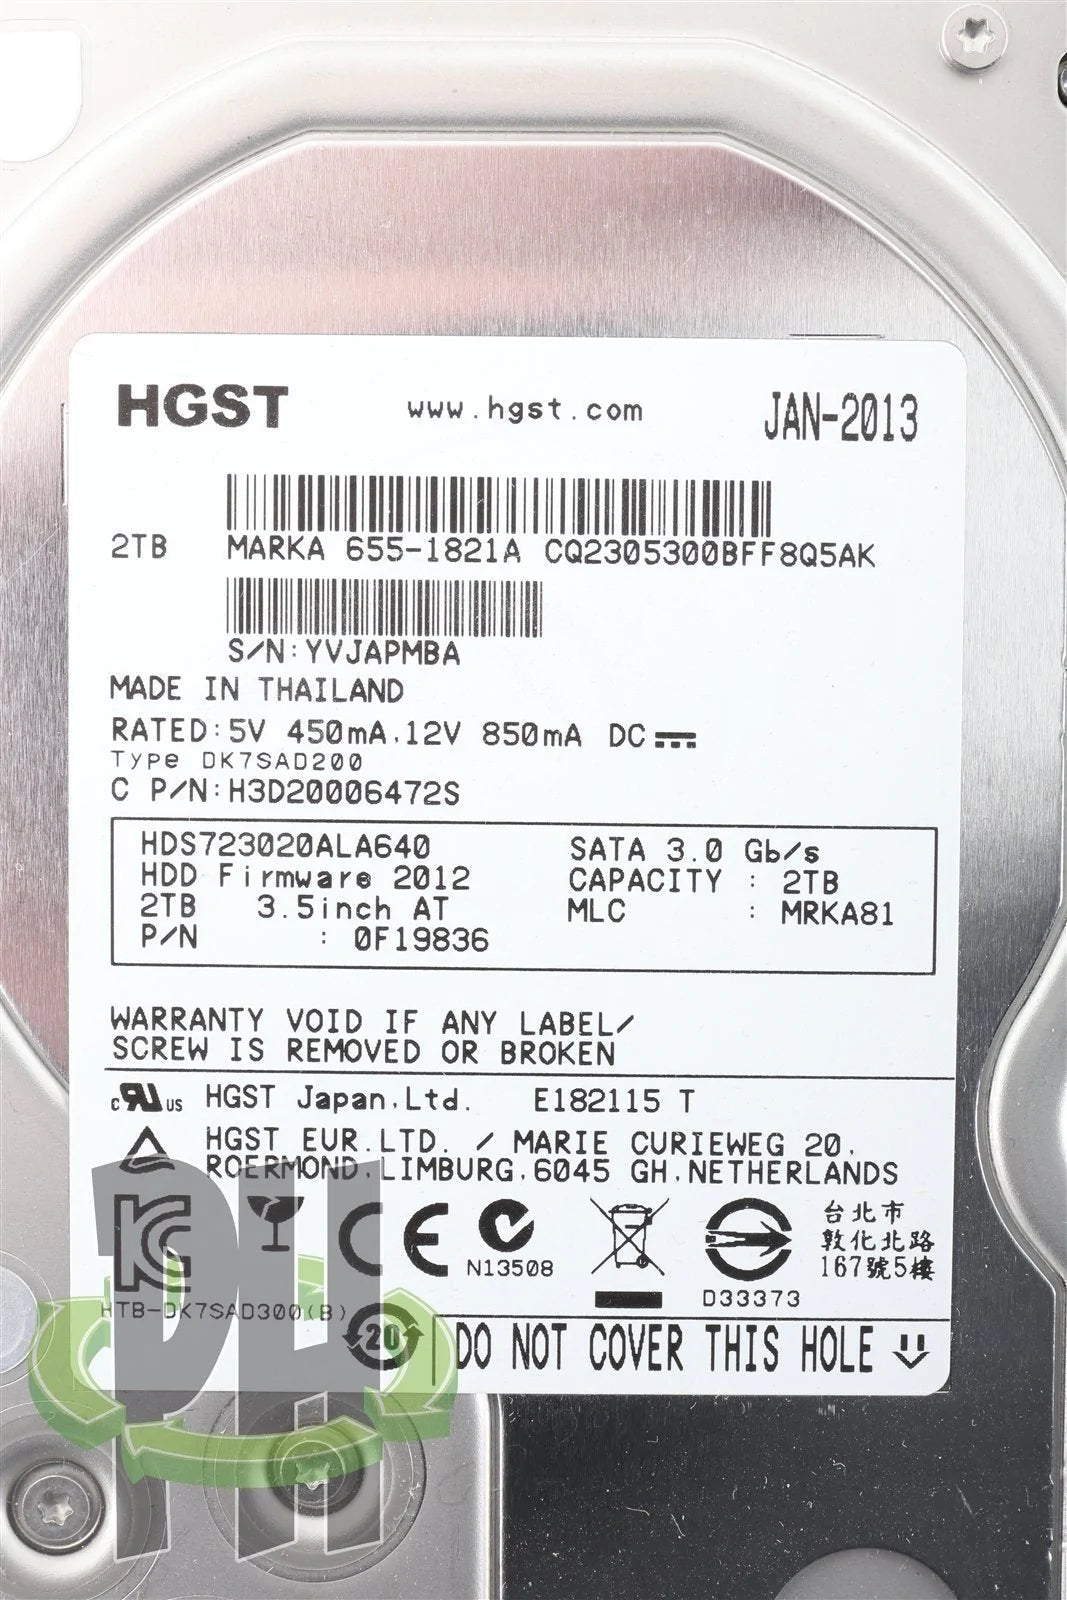 Apple / HGST 2TB 7200rpm Hard Drive for 2012 Mac Pro 655-1821 HDS723020ALA640